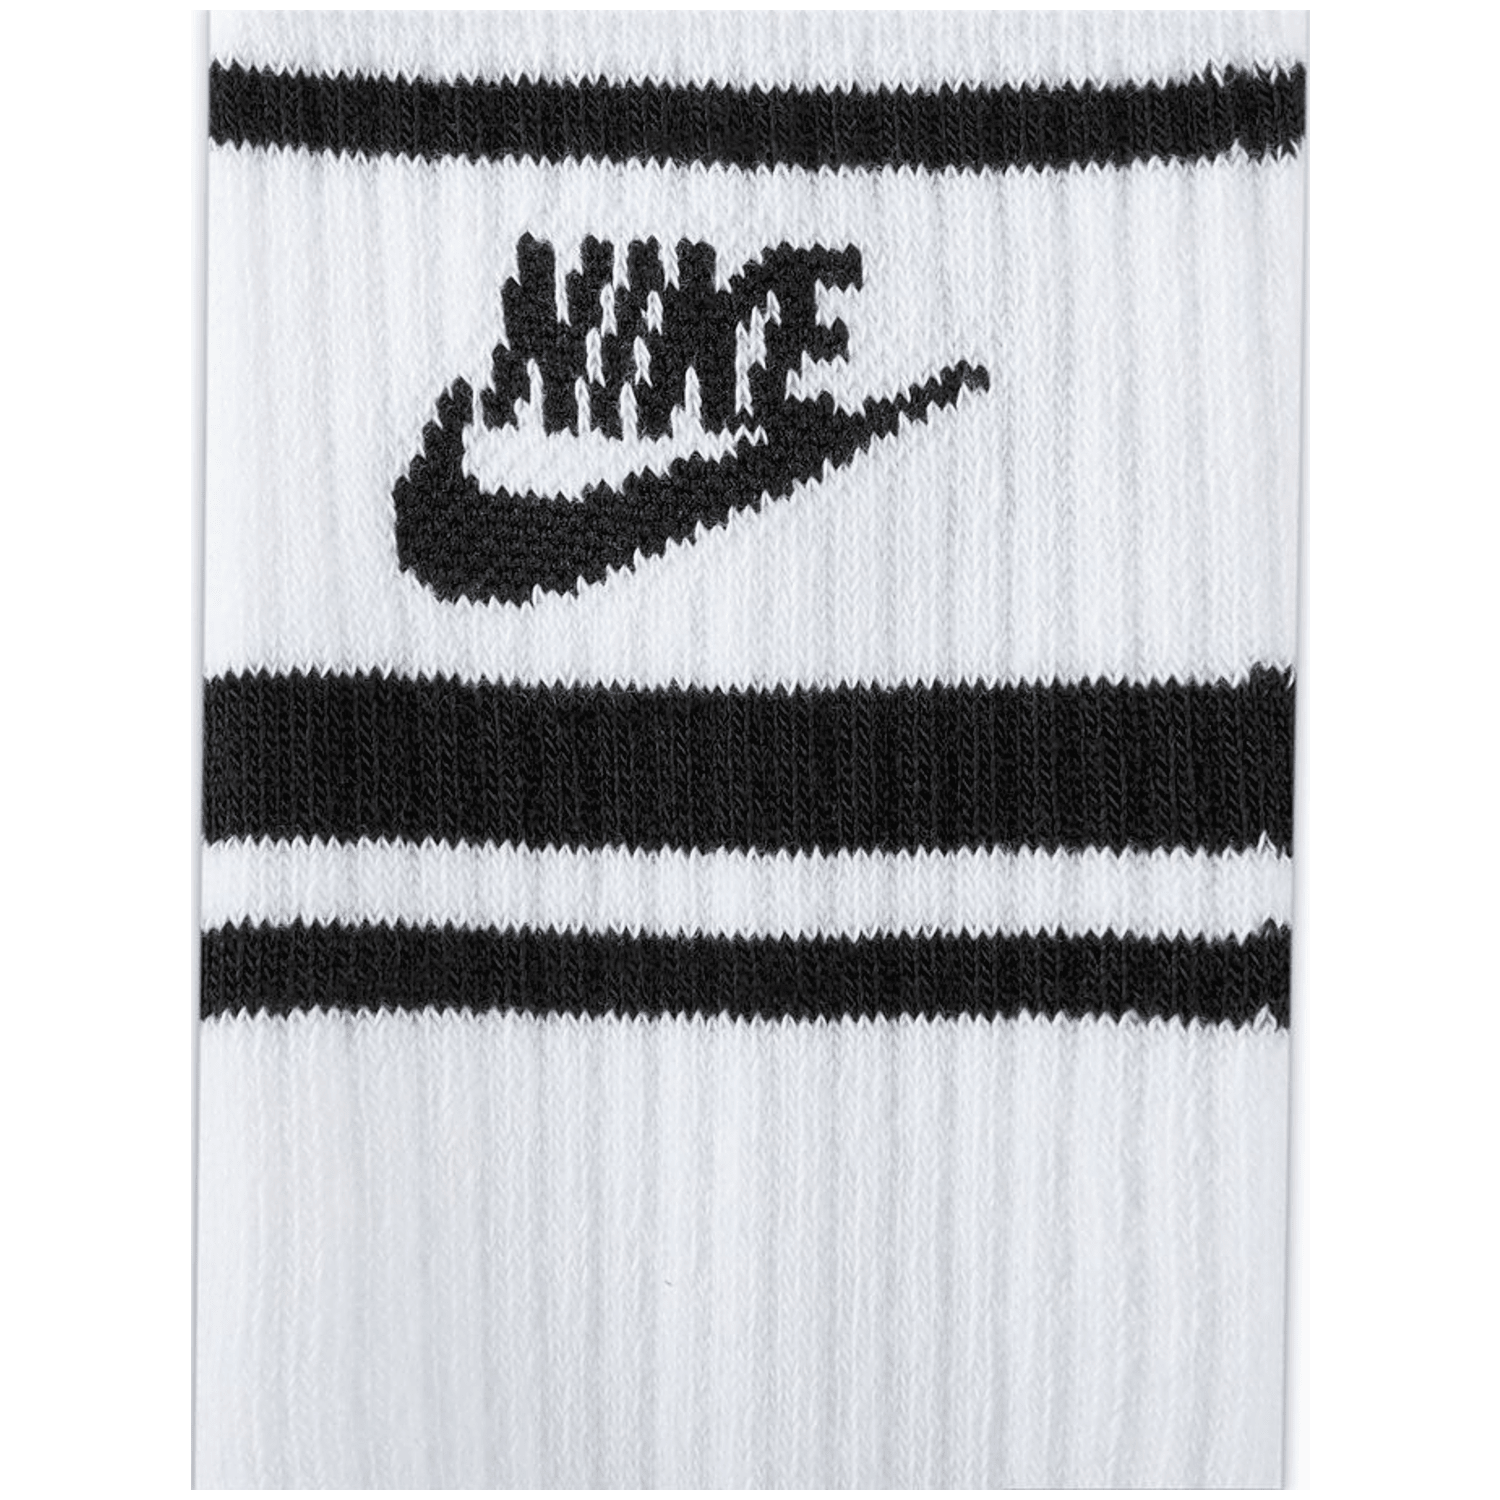 Nike Sportswear Everyday Essential Crew (3 Pairs) Unisex Socken